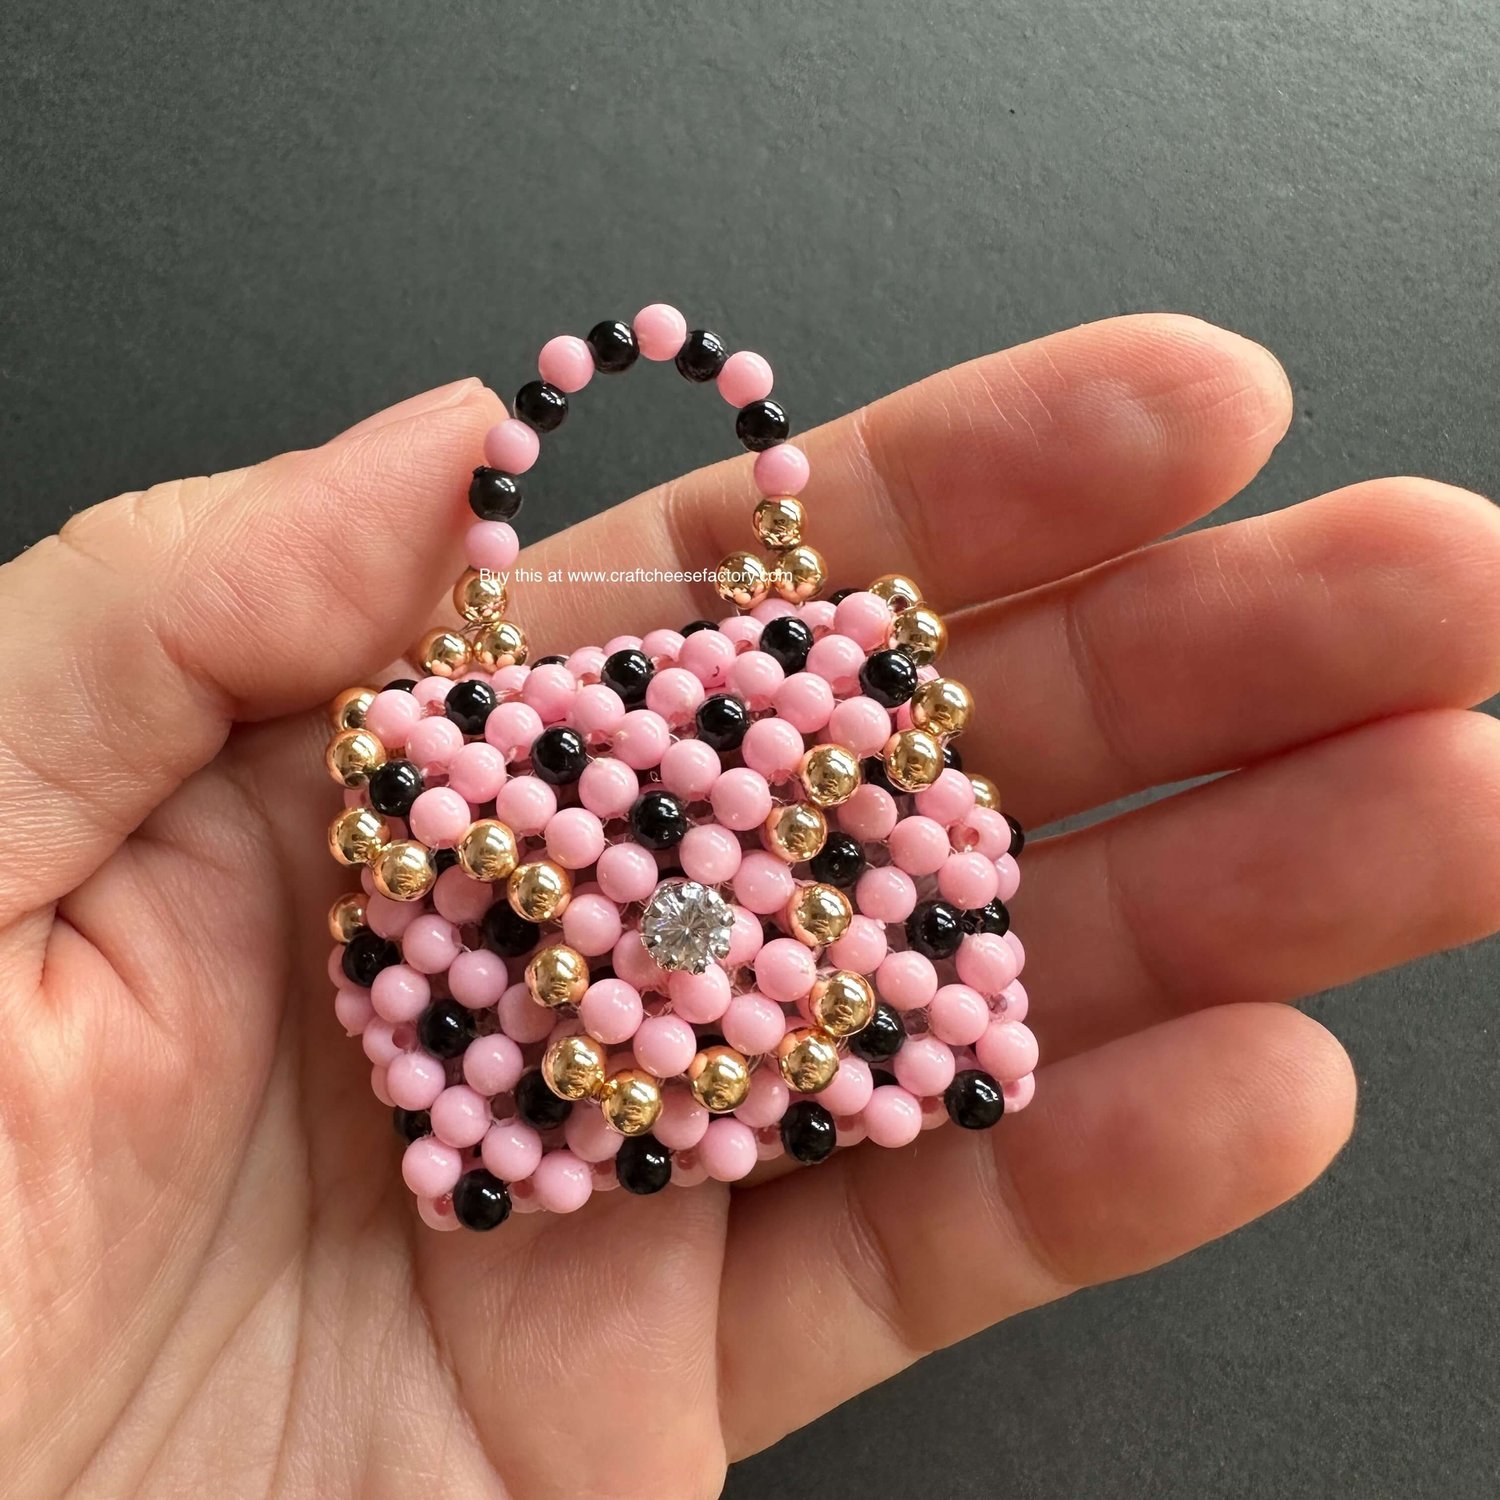 LV beads made hand bag hand made